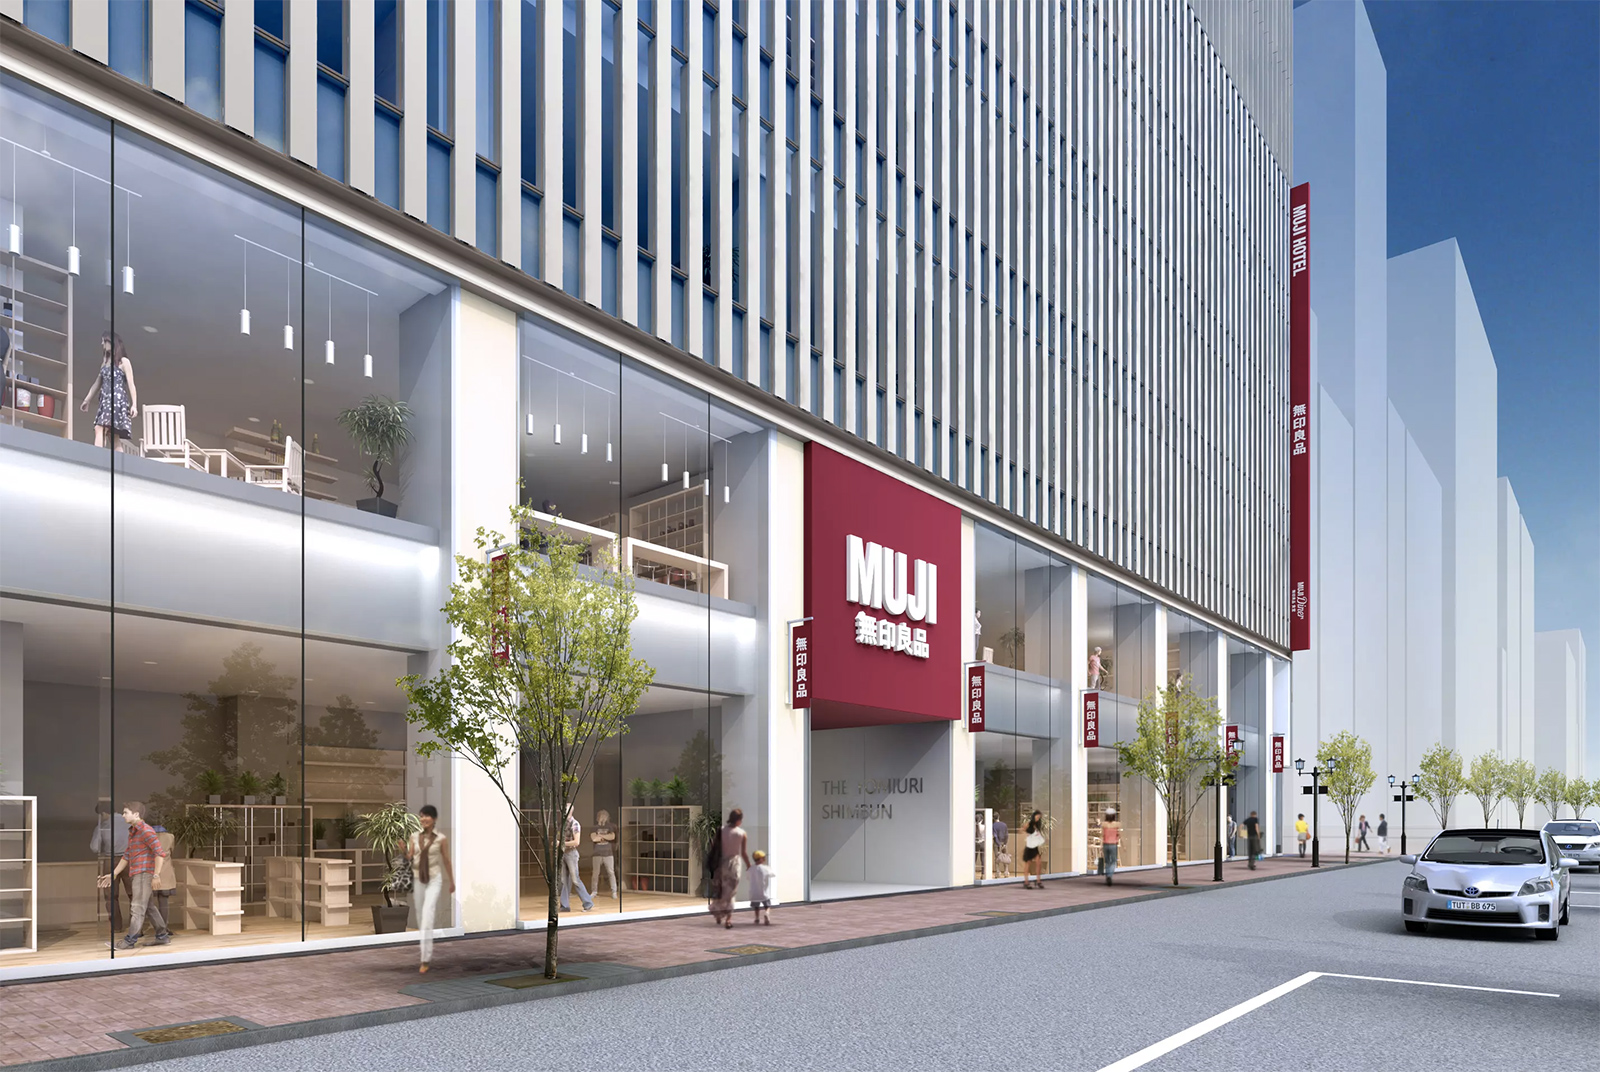 Muji Hotel Tokyo -- opening in 2019